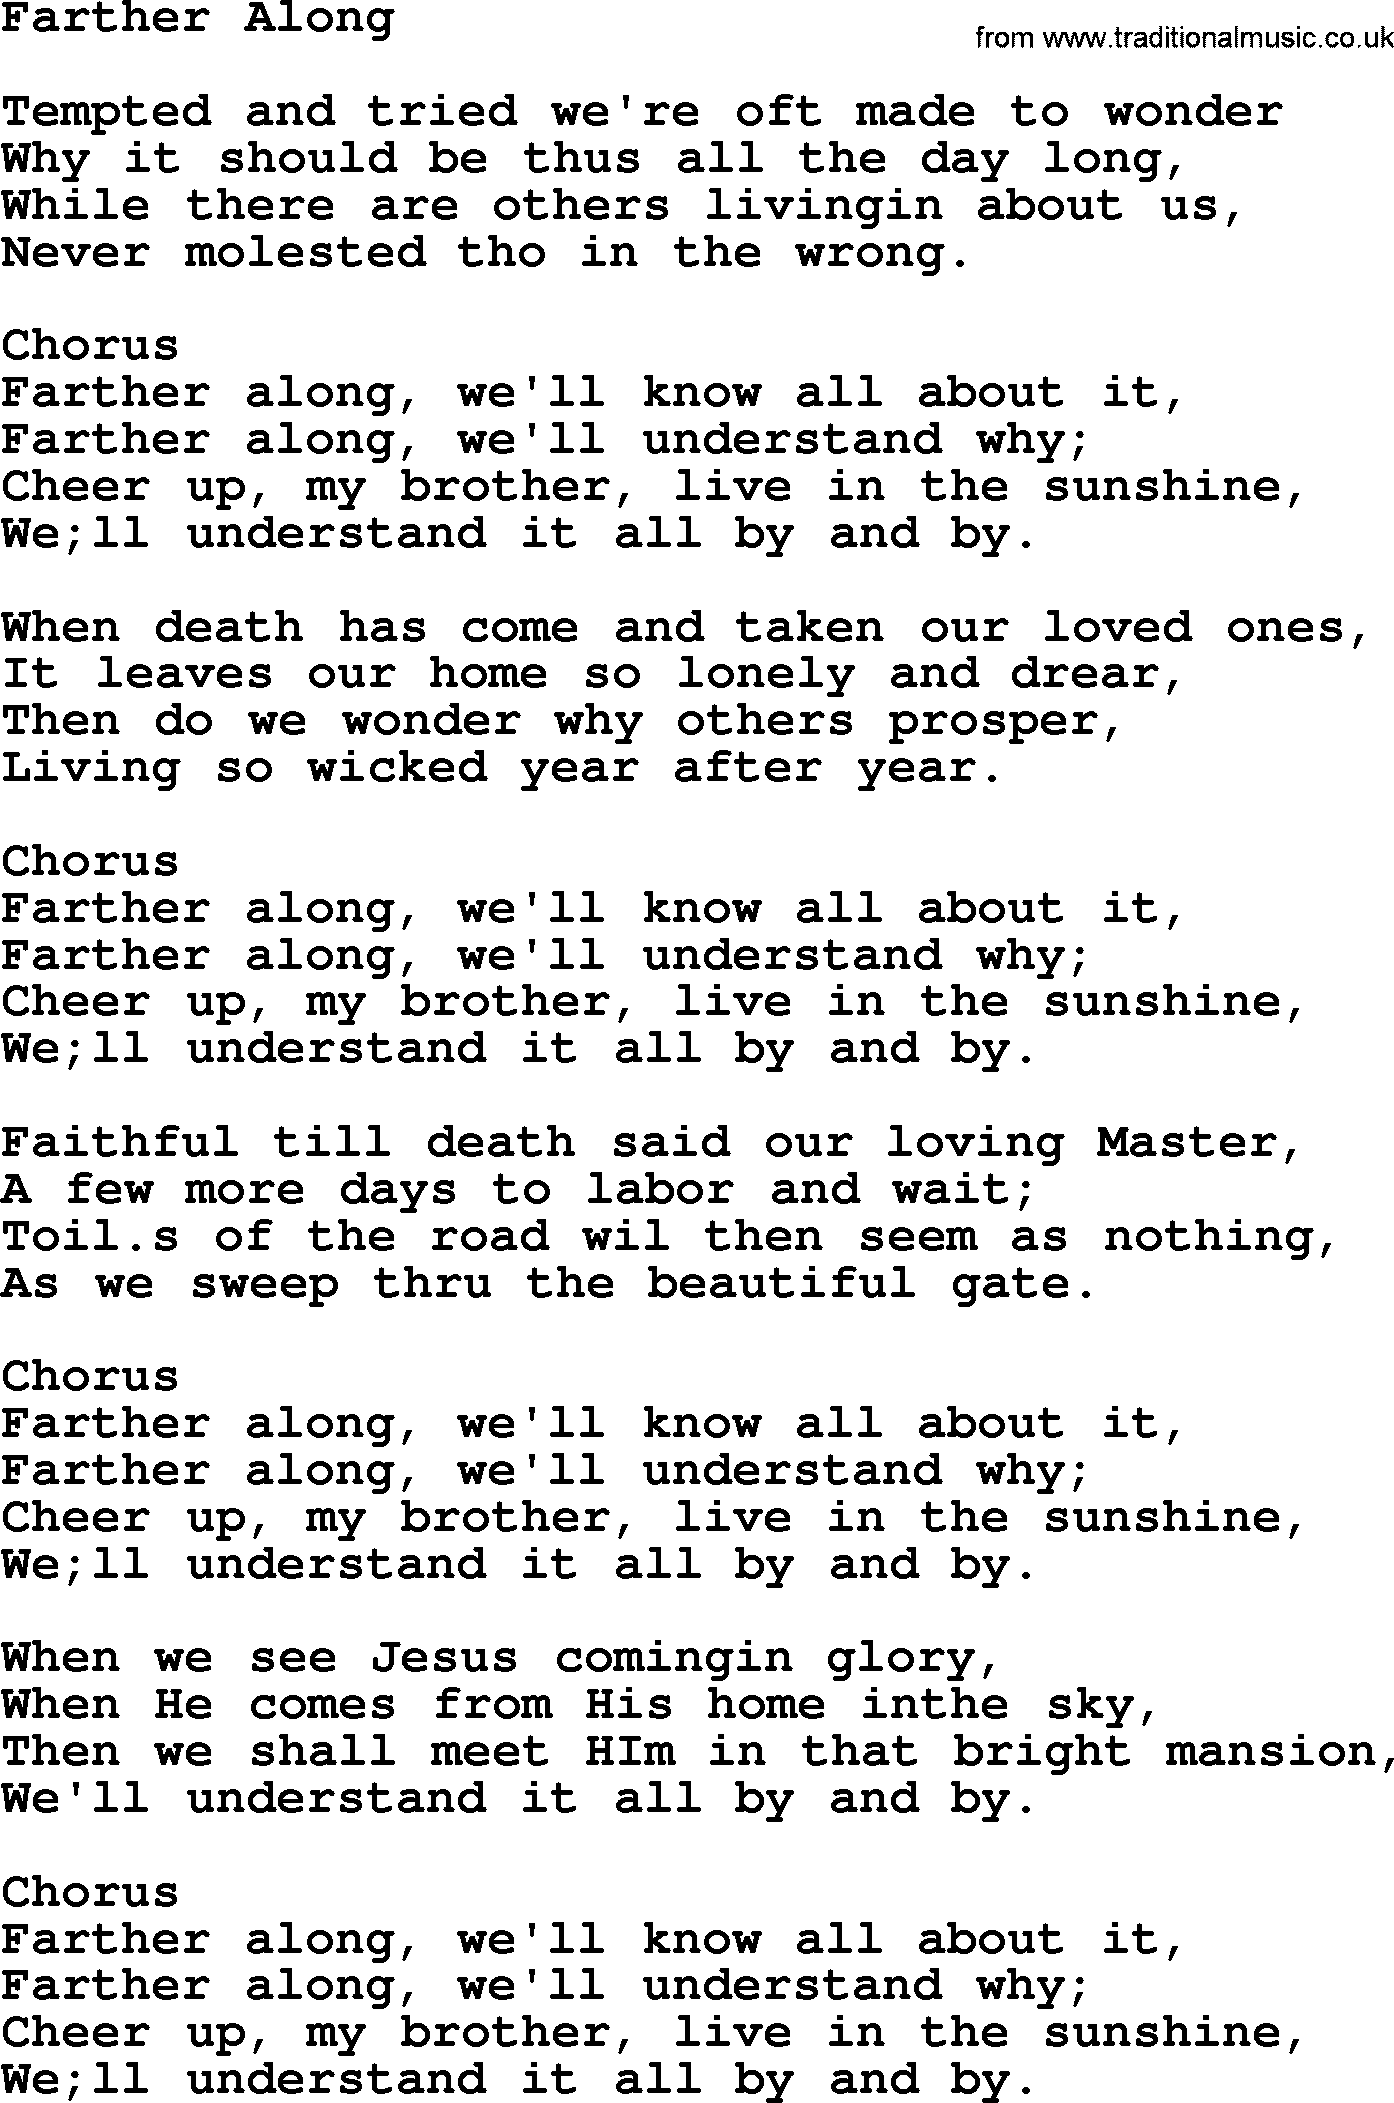 Baptist Hymnal, Christian Song: Farther Along- lyrics with PDF for printing